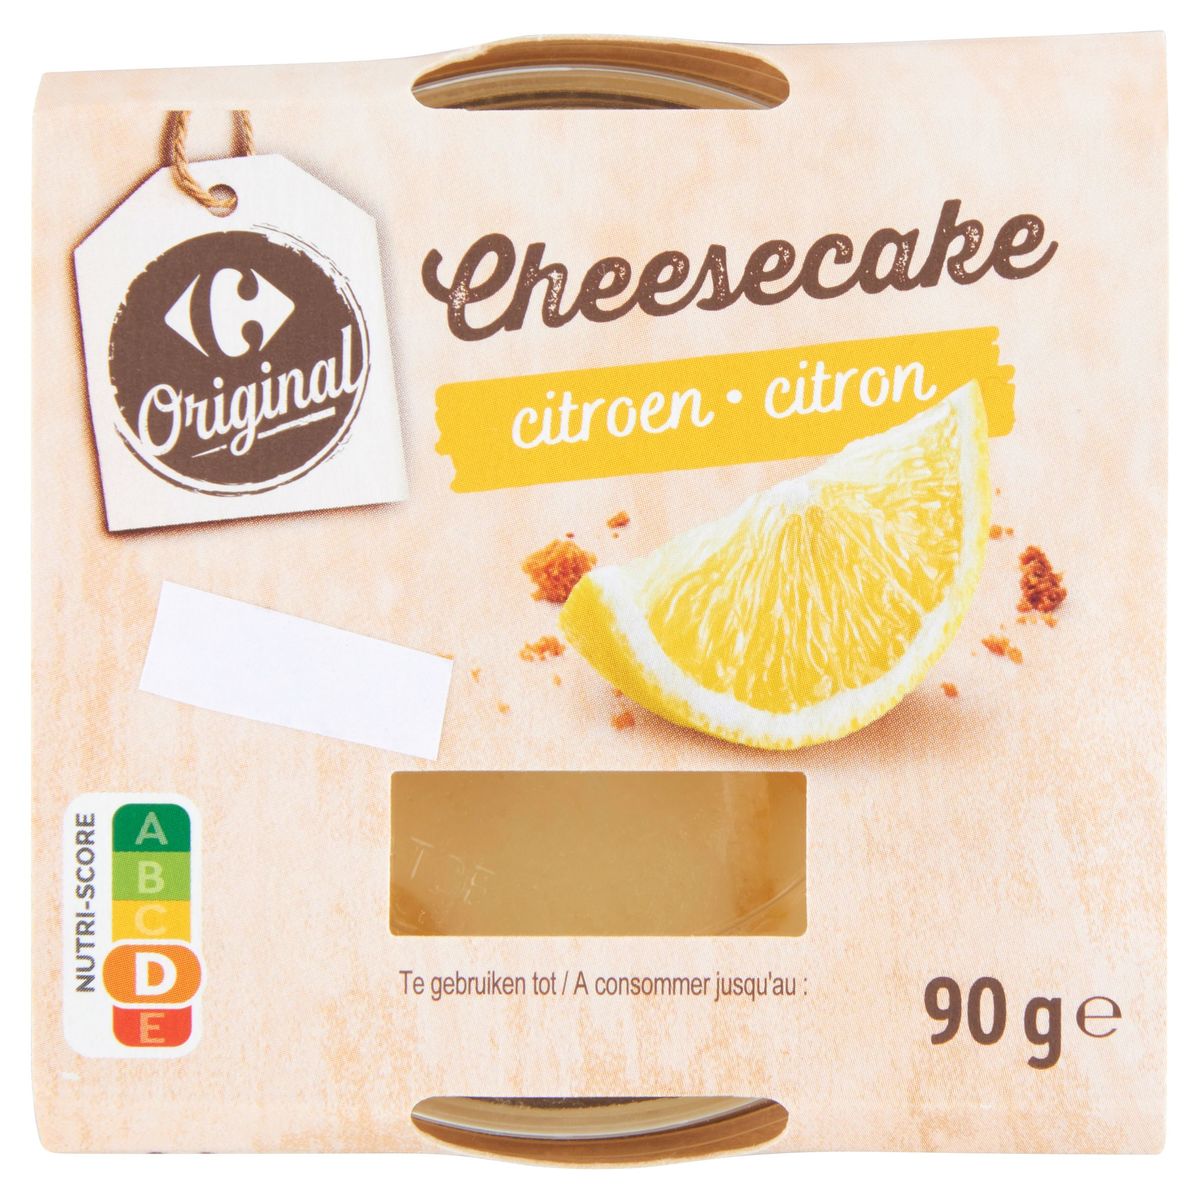 Carrefour Original Cheesecake Citron 90 g